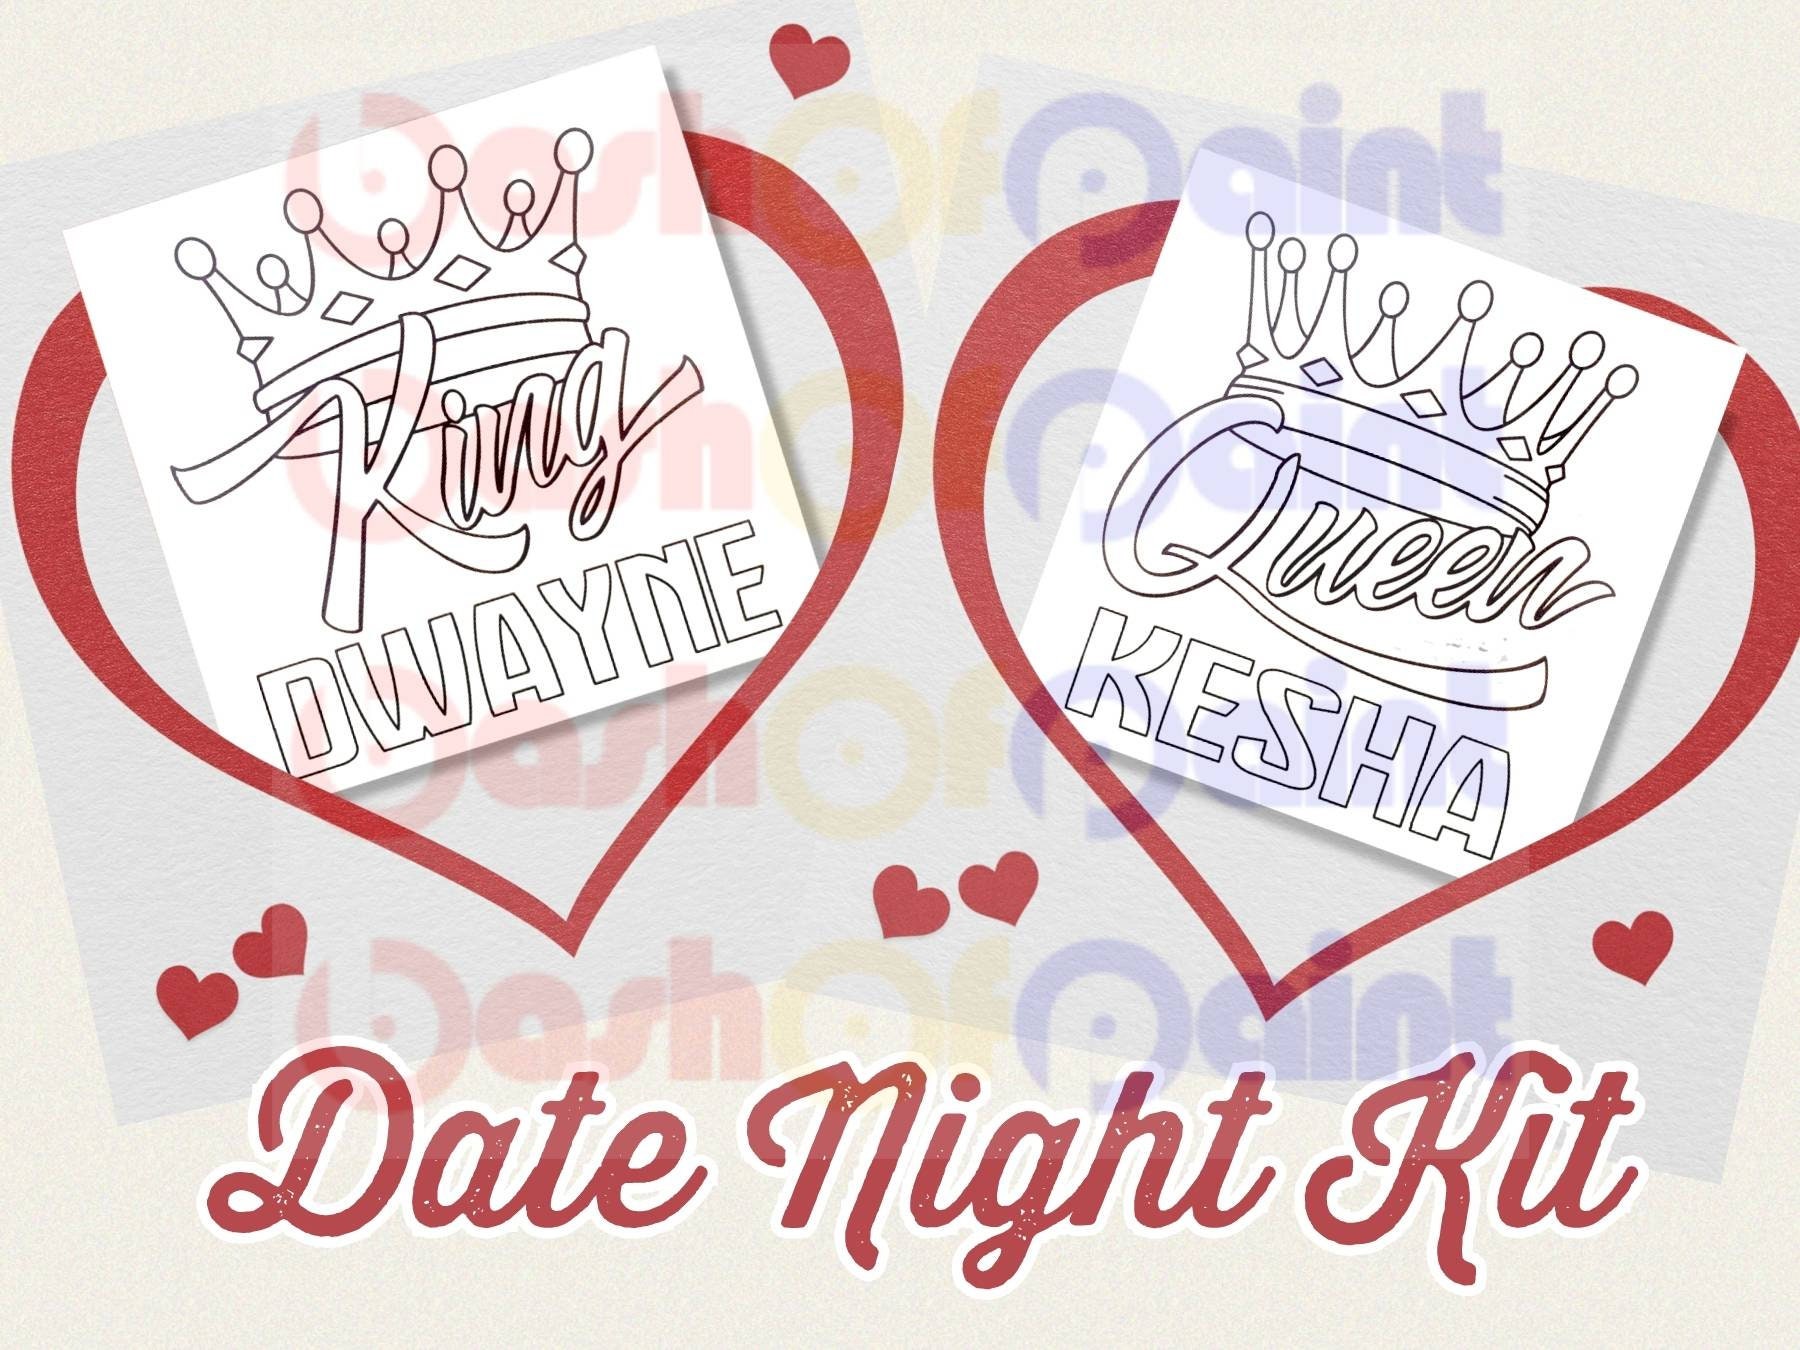 Date Night Paint and Sip Date Night Kit, Romantic Date Night